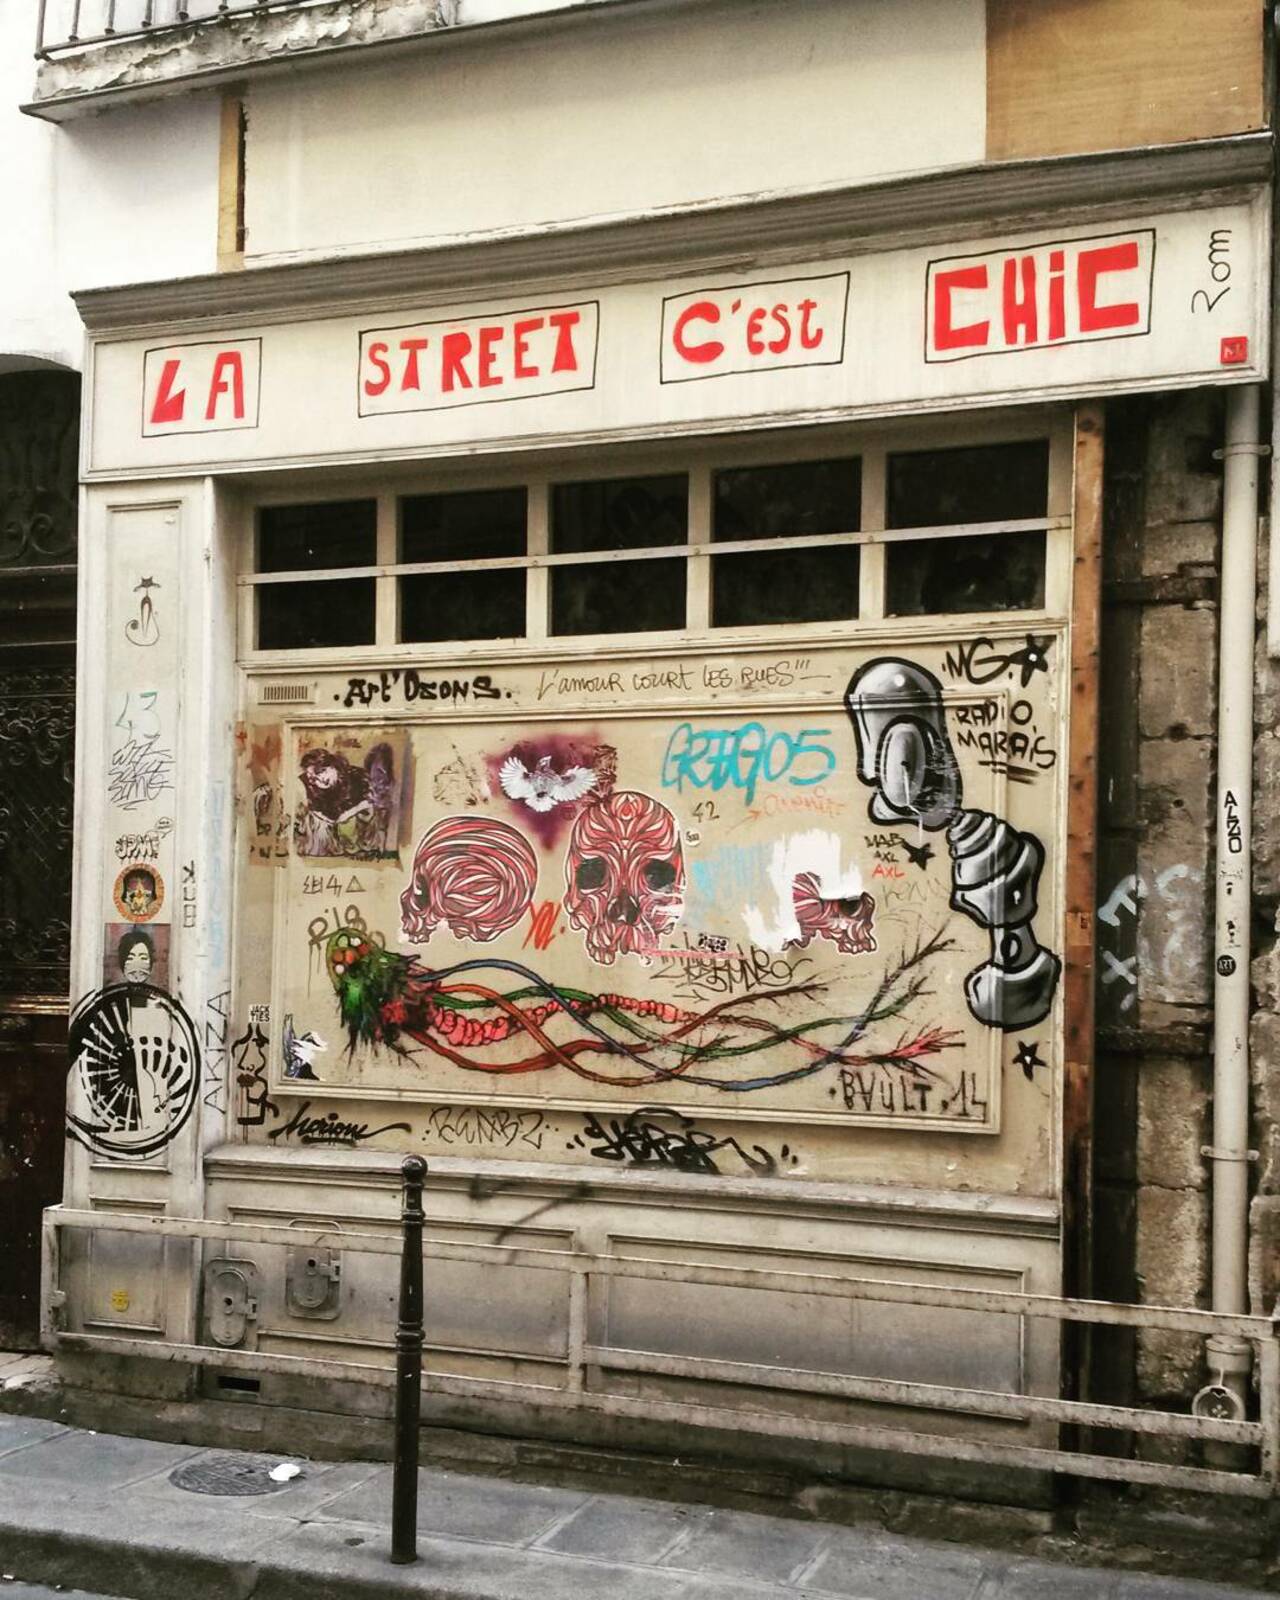 #Paris #graffiti photo by @le_cyclopede http://ift.tt/1P9TDUR #StreetArt http://t.co/vKmTzDQH15